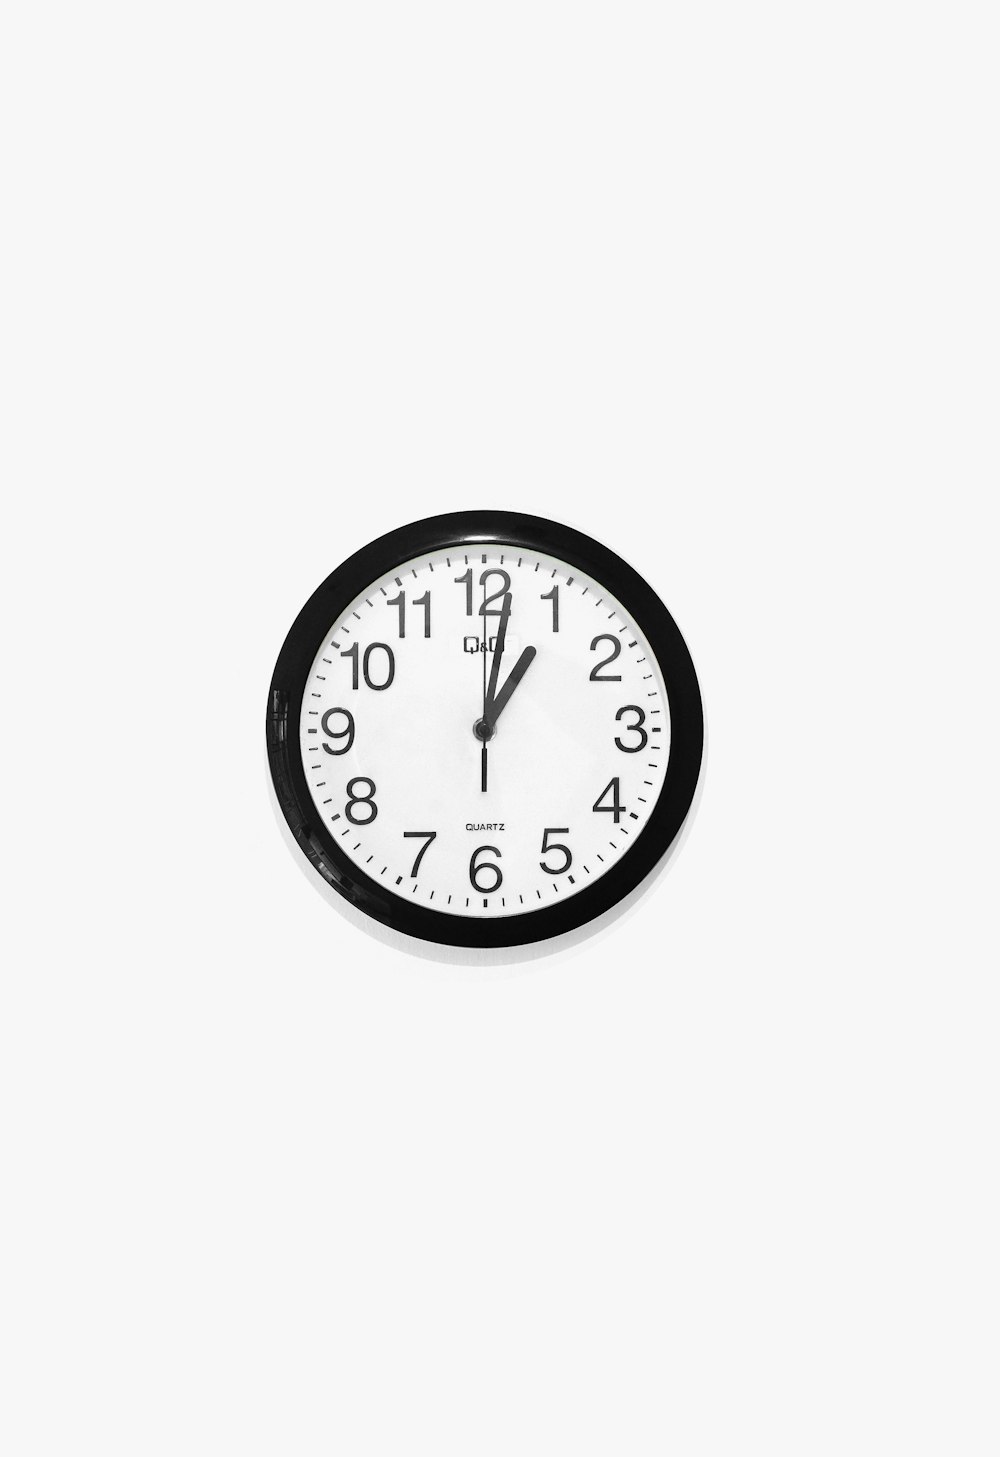 black and white round analog wall clock at 10 10